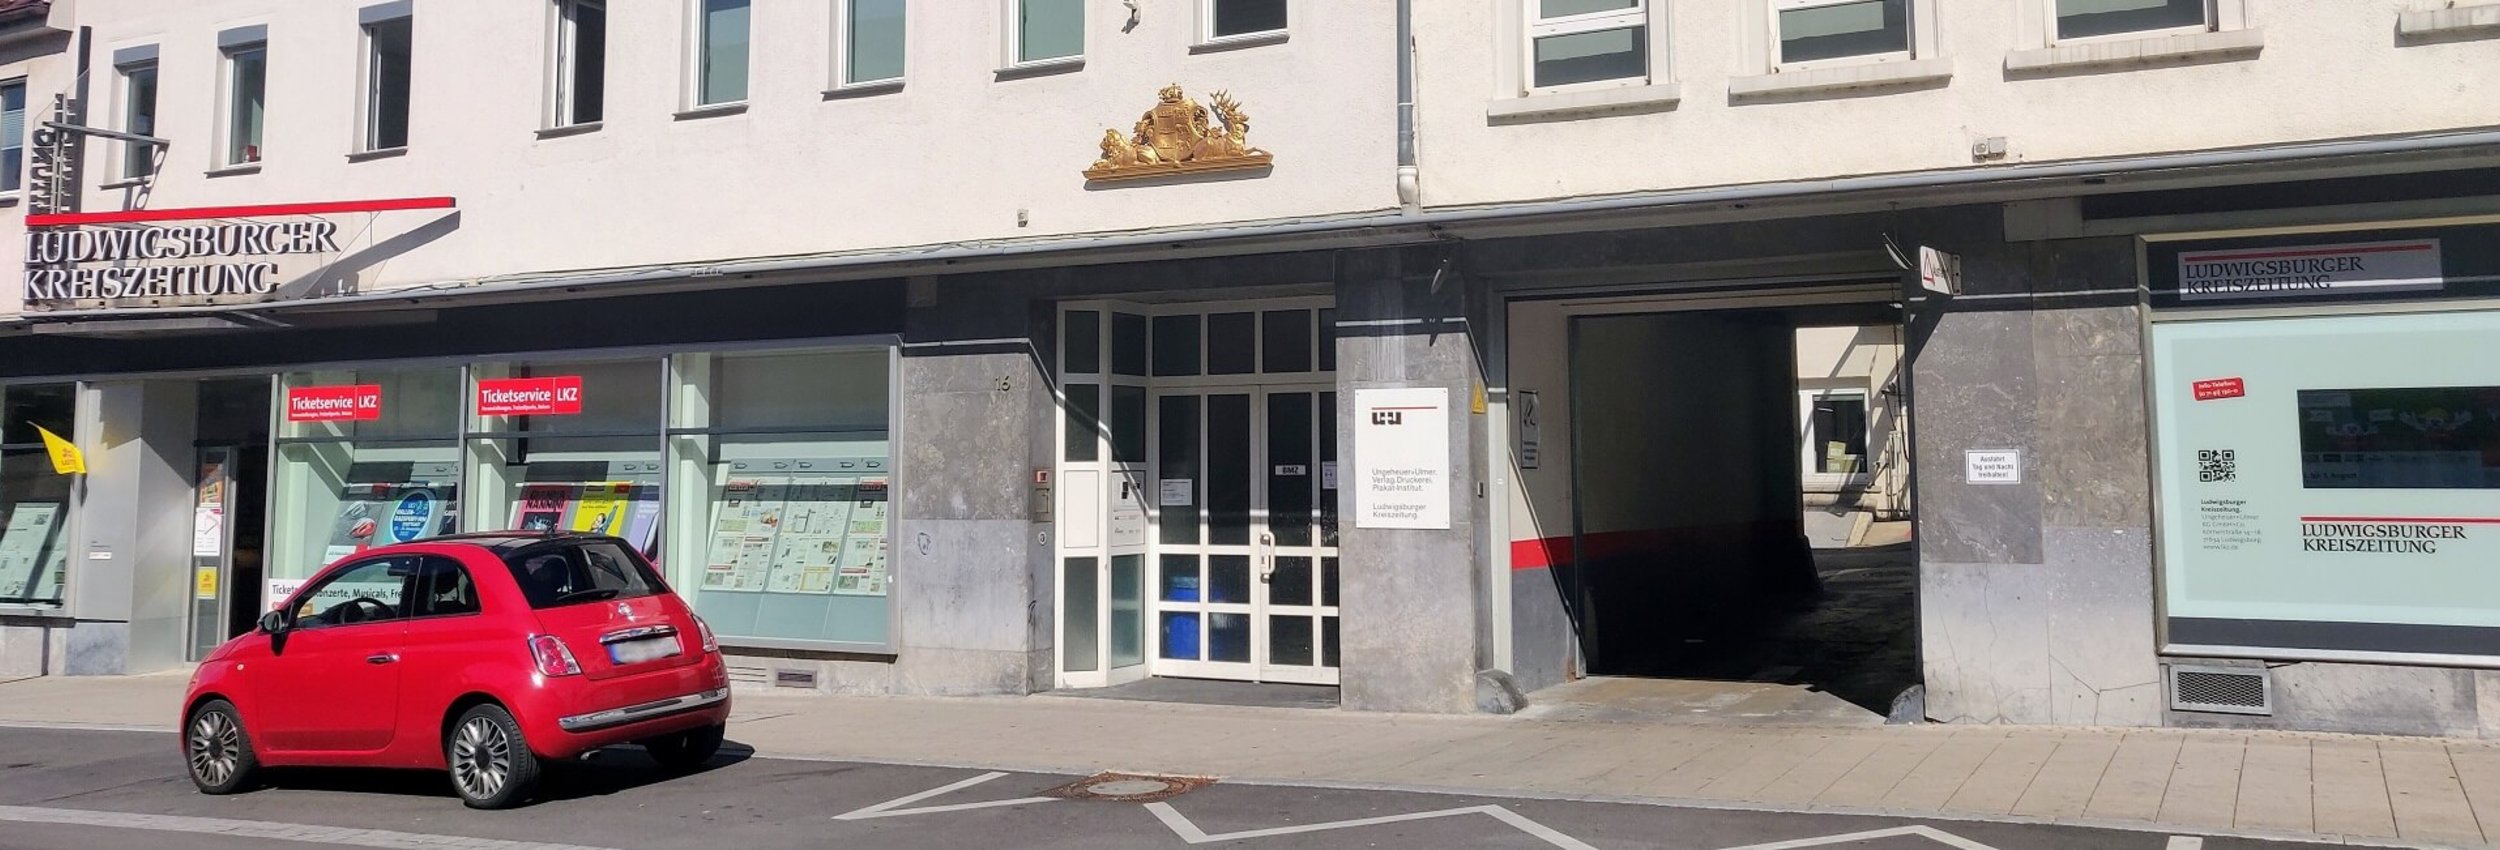 Ludwigsburger Kreiszeitung Kundencenter